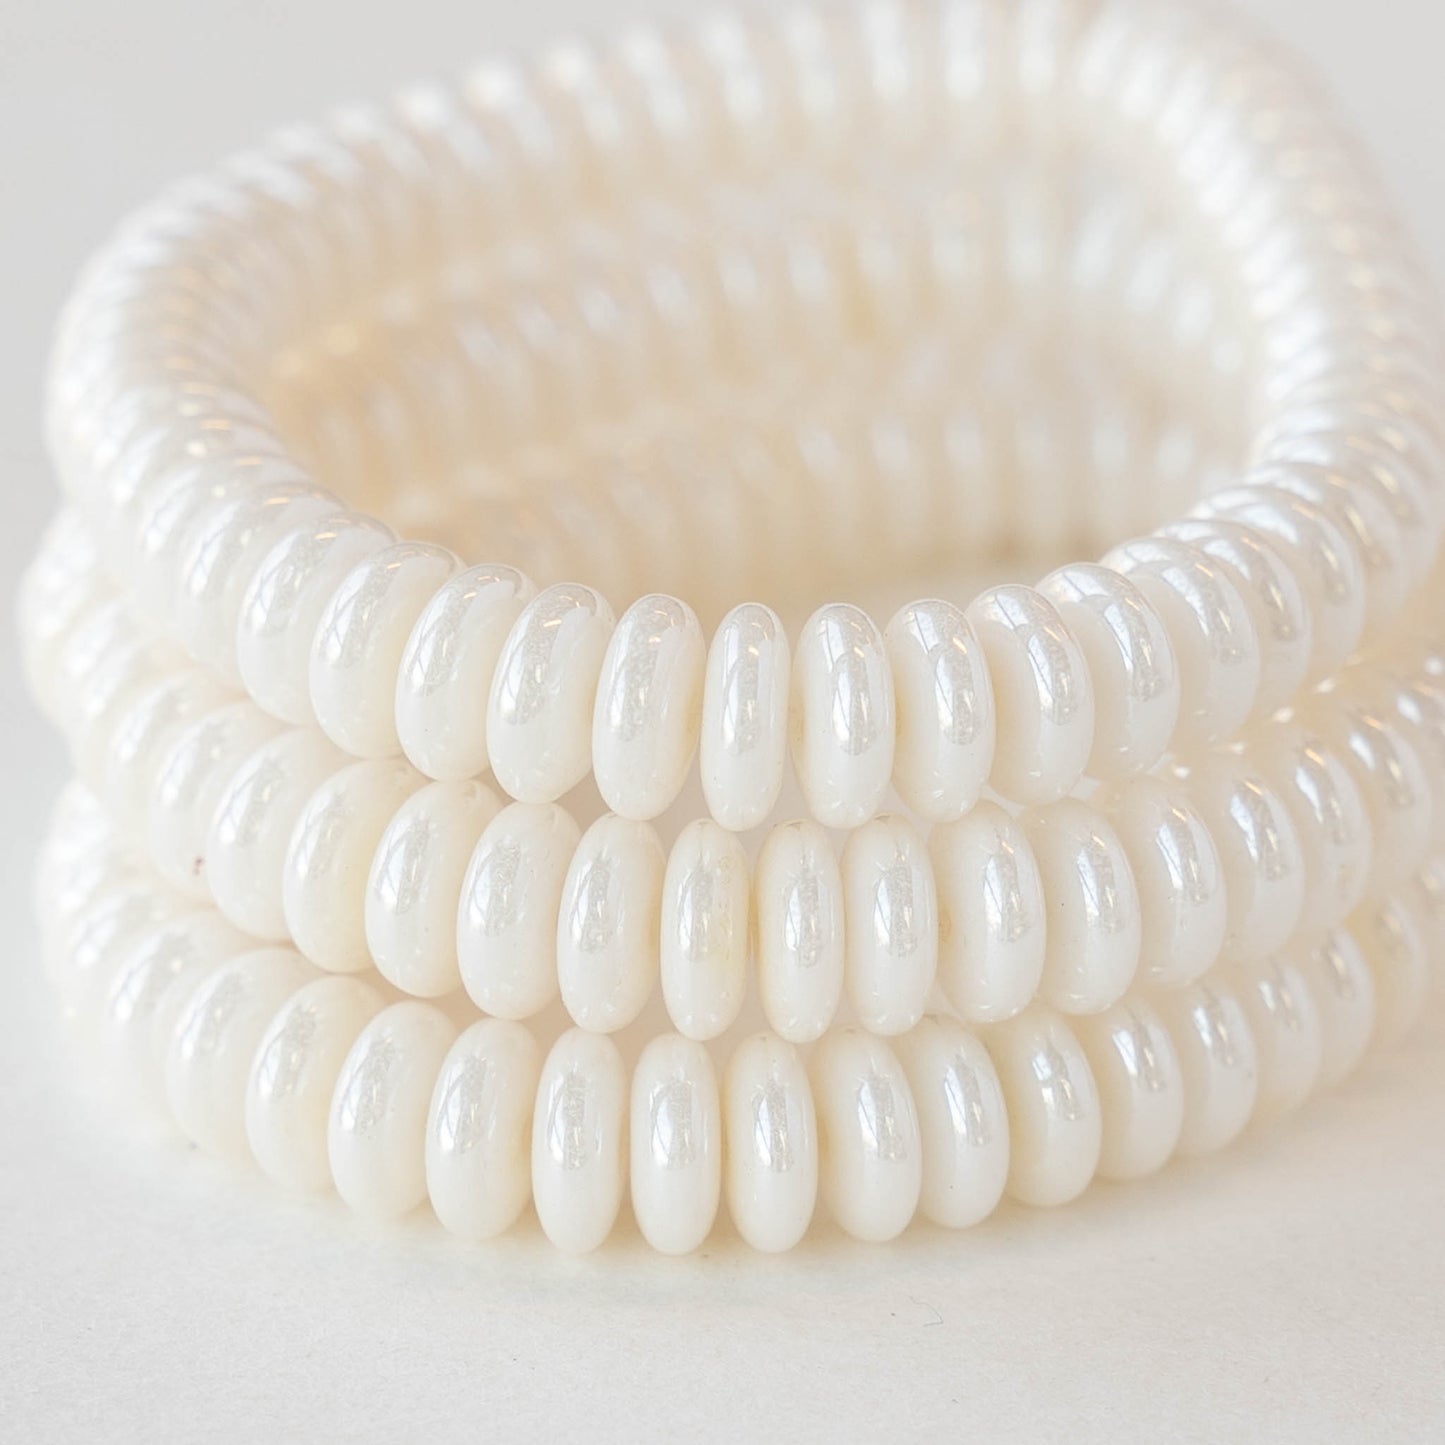 6mm Rondelle Beads - White Luster - 50 Beads